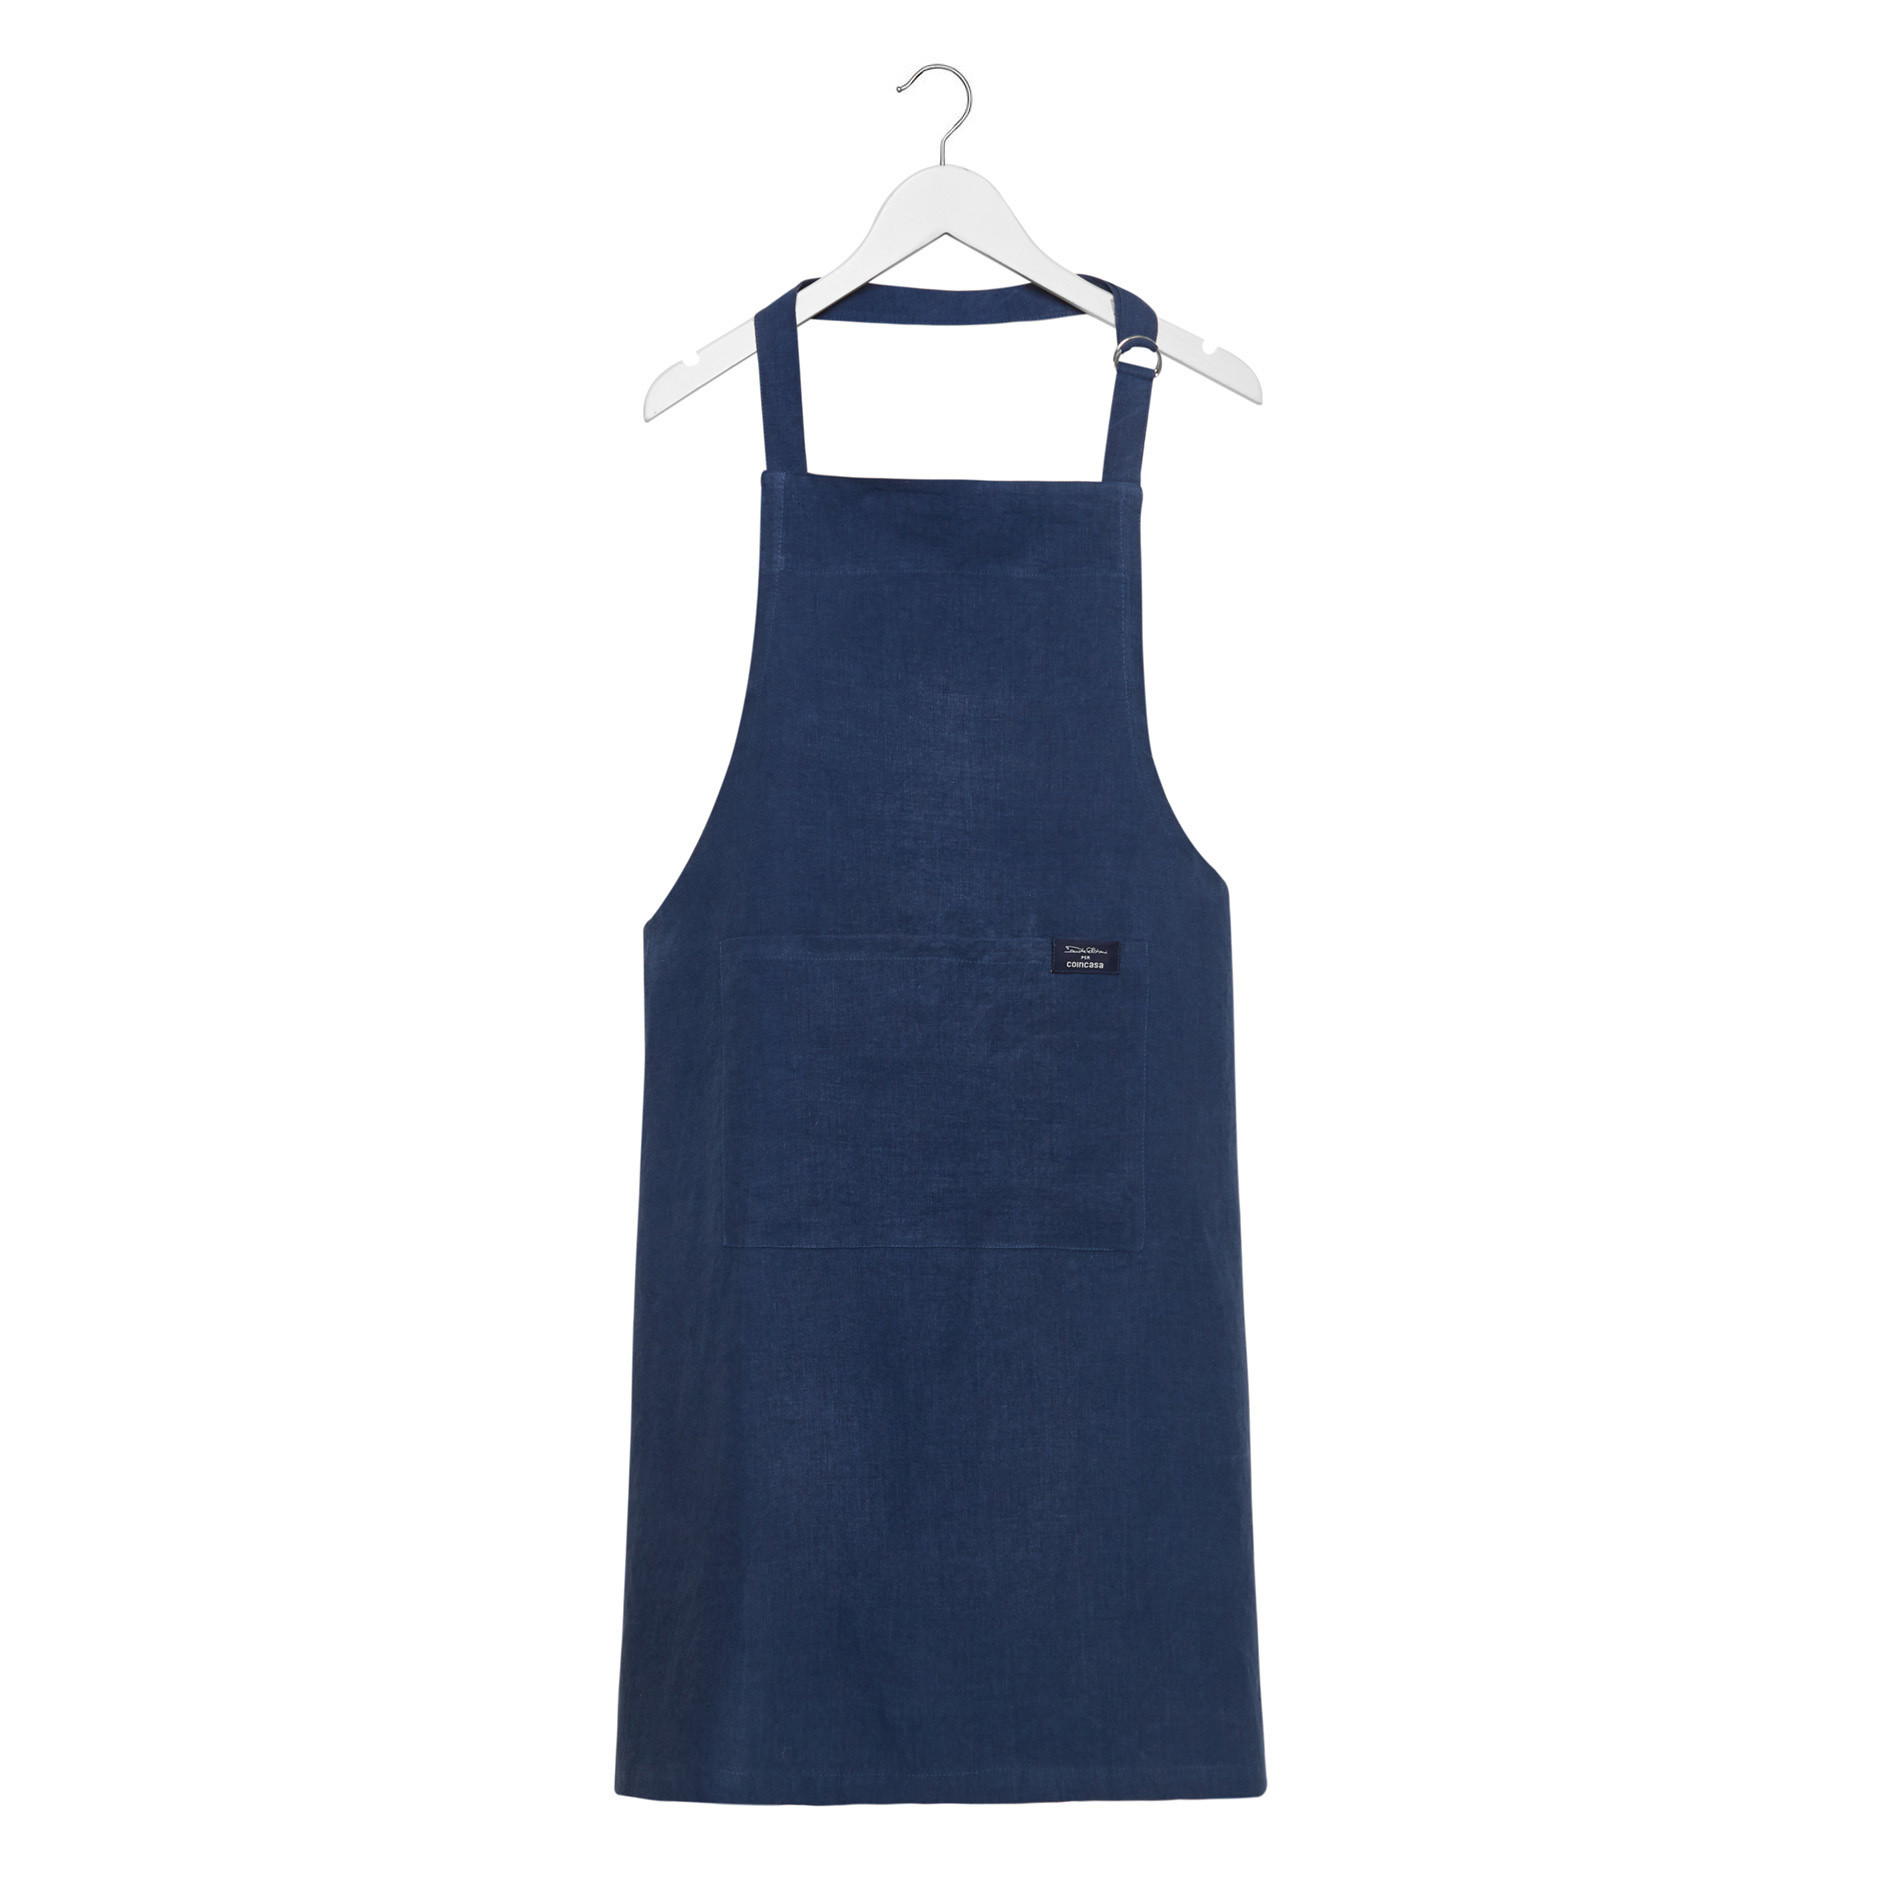 Davide Oldani for Coincasa pure linen apron, Blue, large image number 0